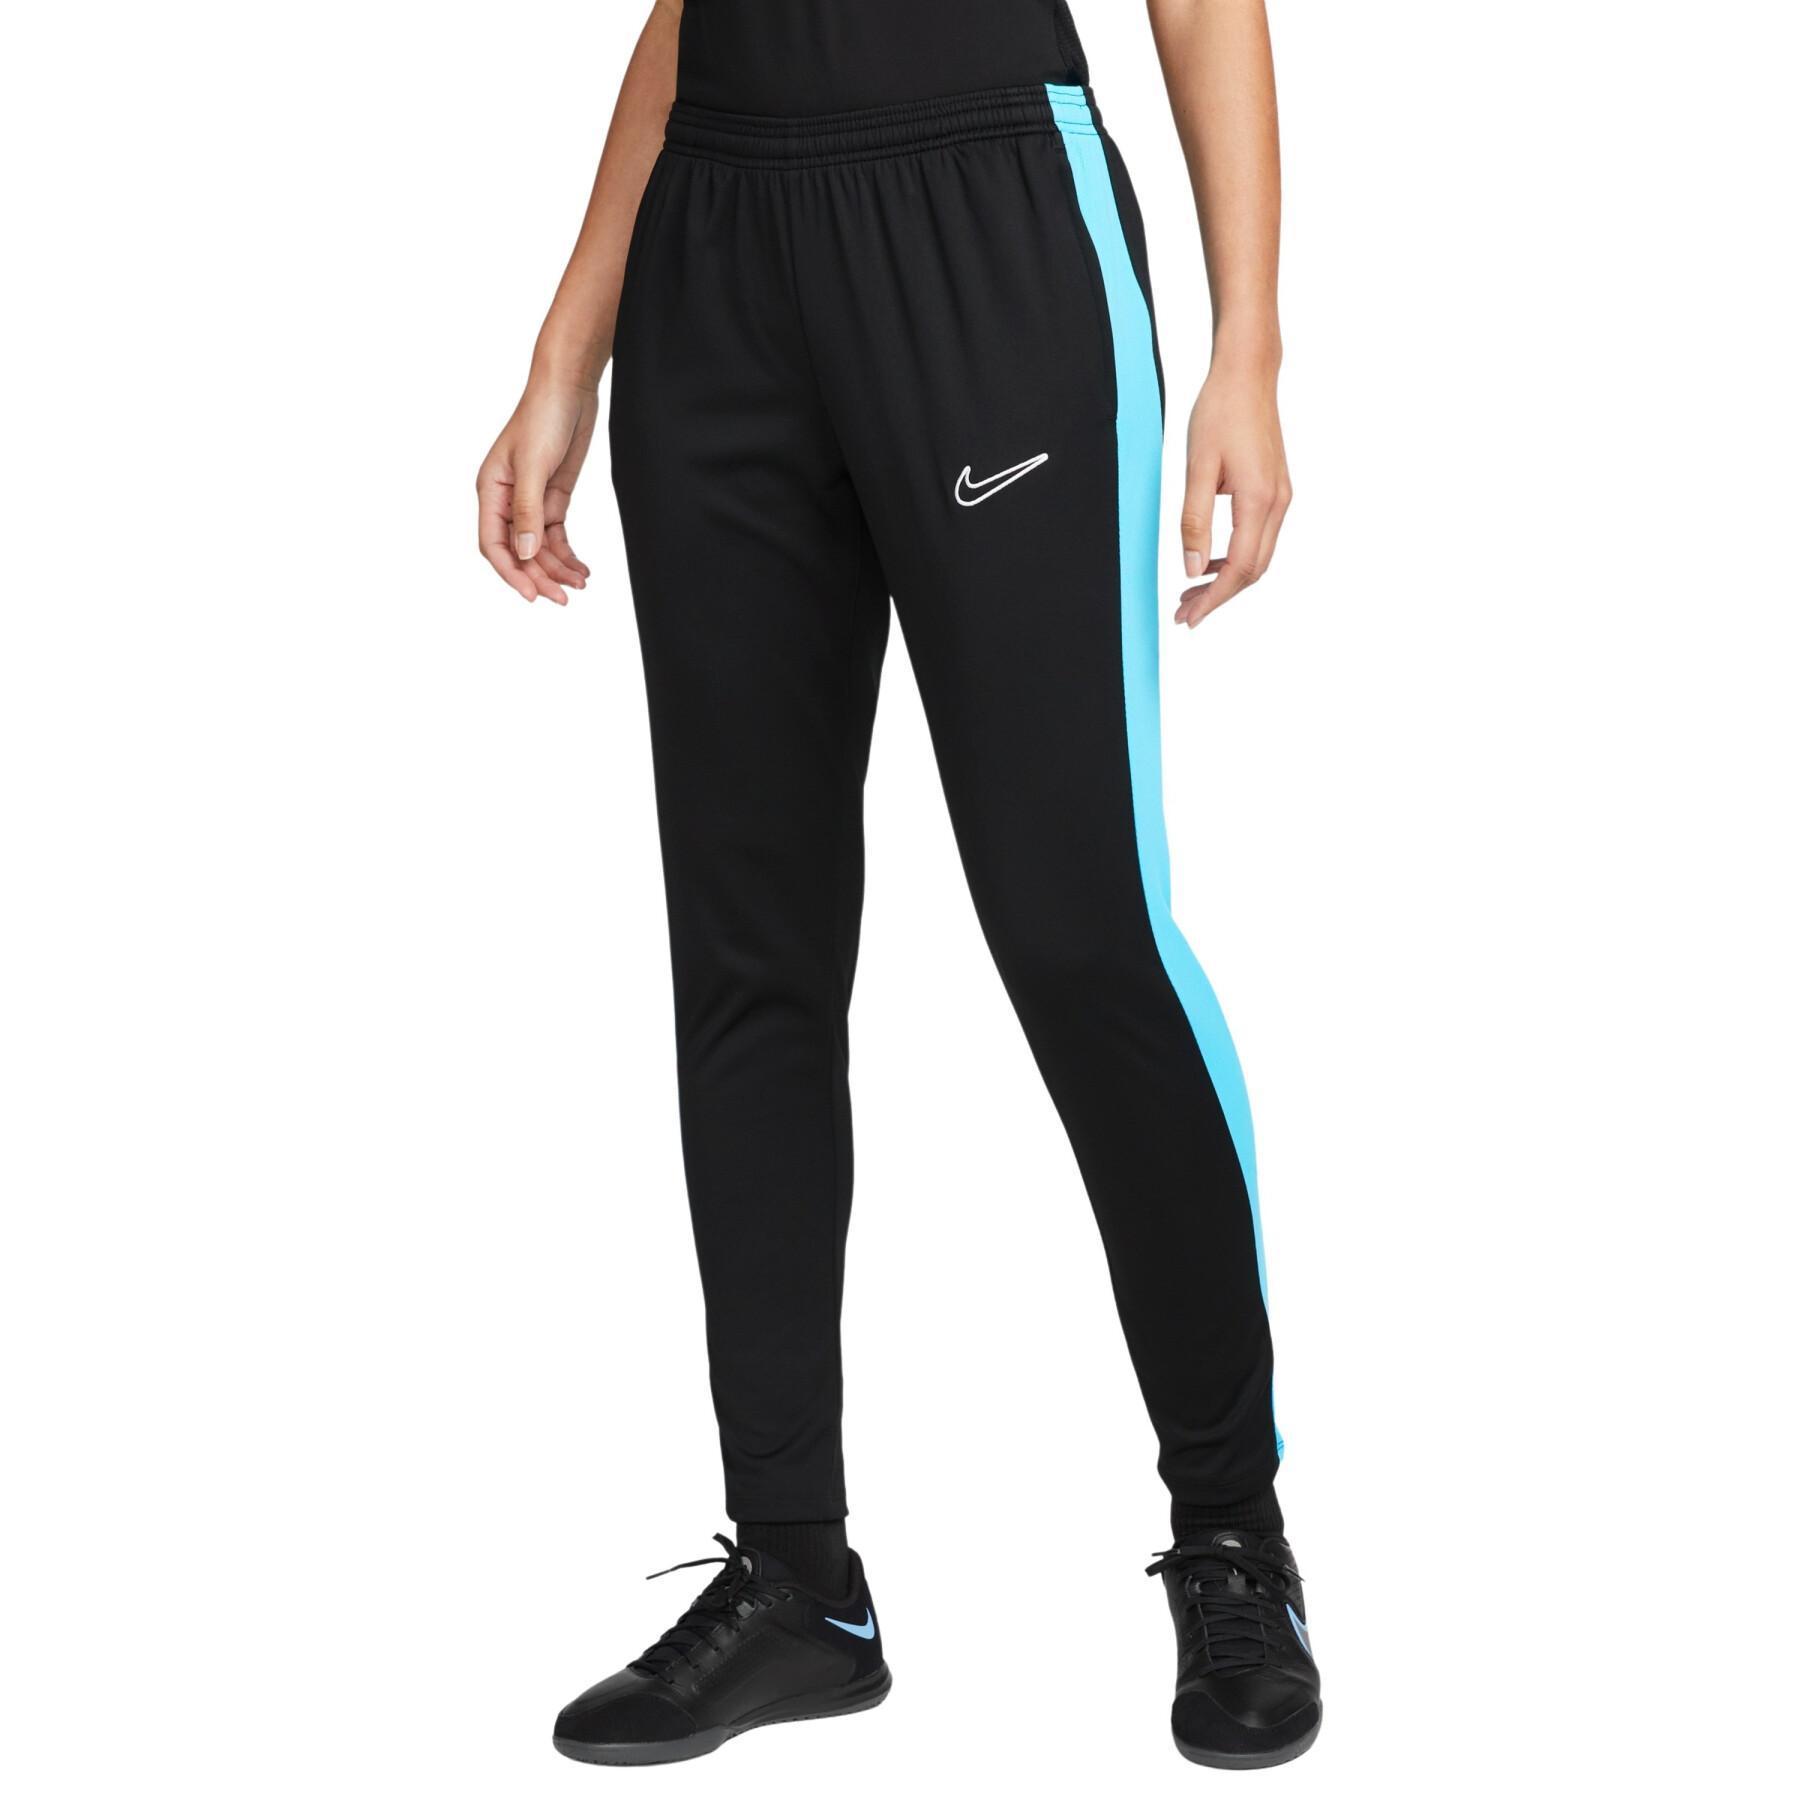 Sweatpants women's Nike Dri-FIT Academy - Nike - Training Pants - Teamwear